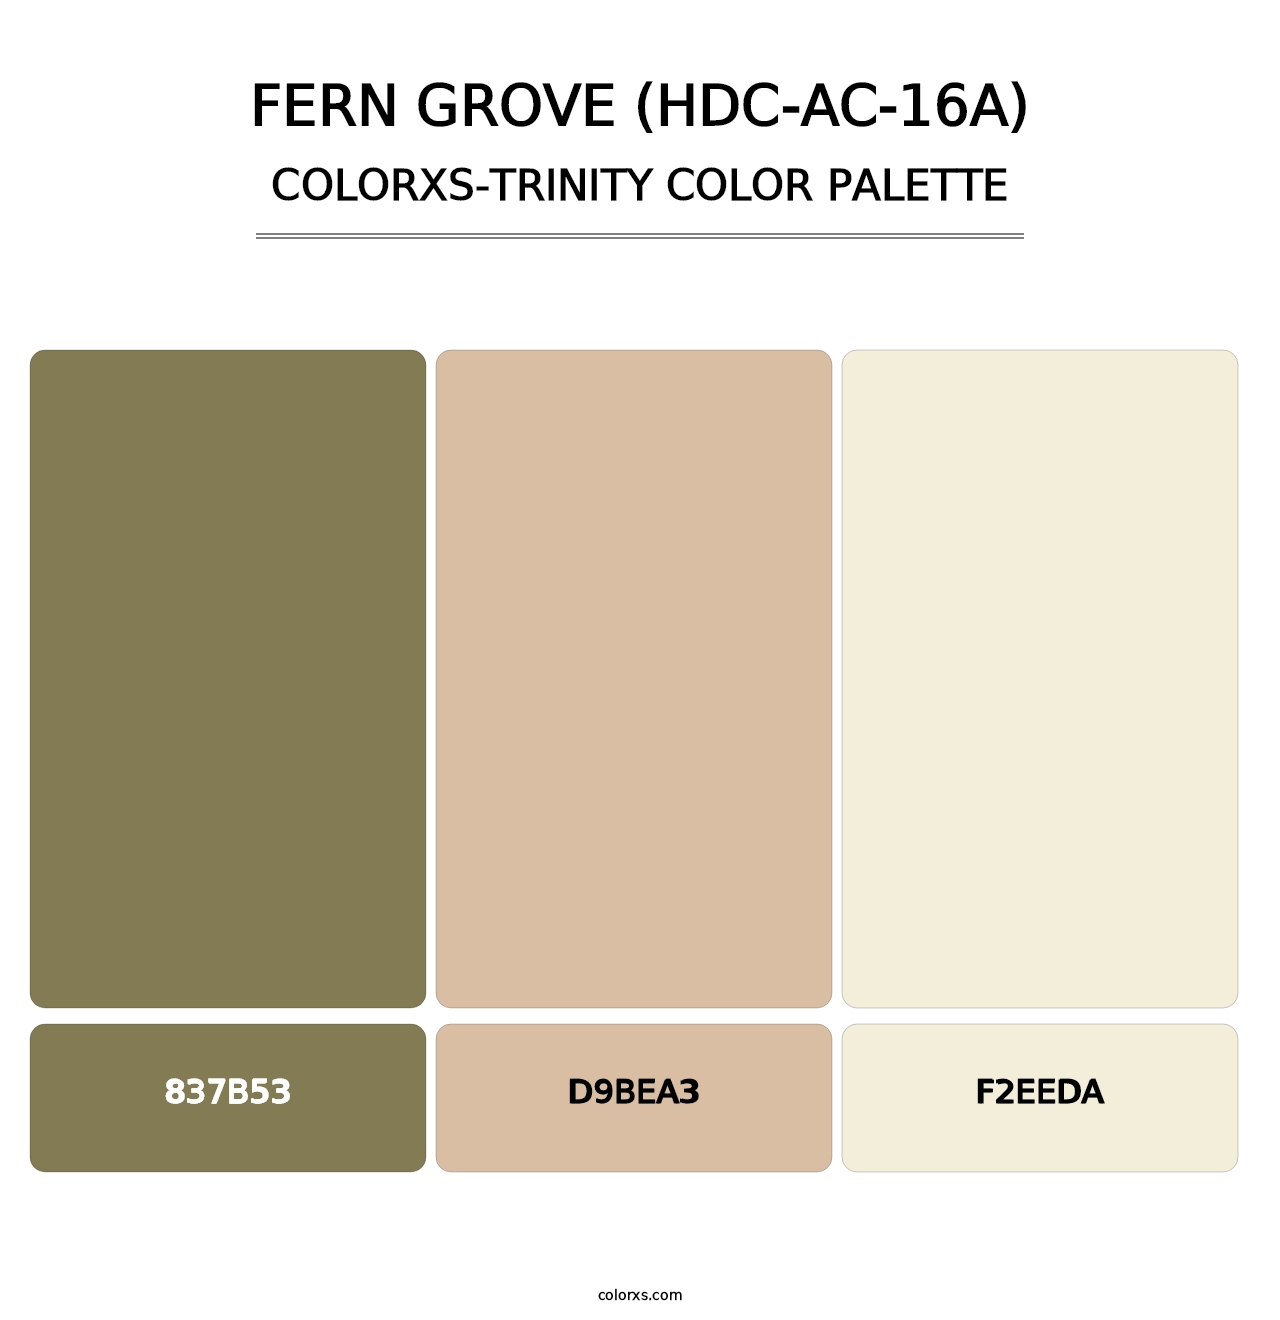 Fern Grove (HDC-AC-16A) - Colorxs Trinity Palette